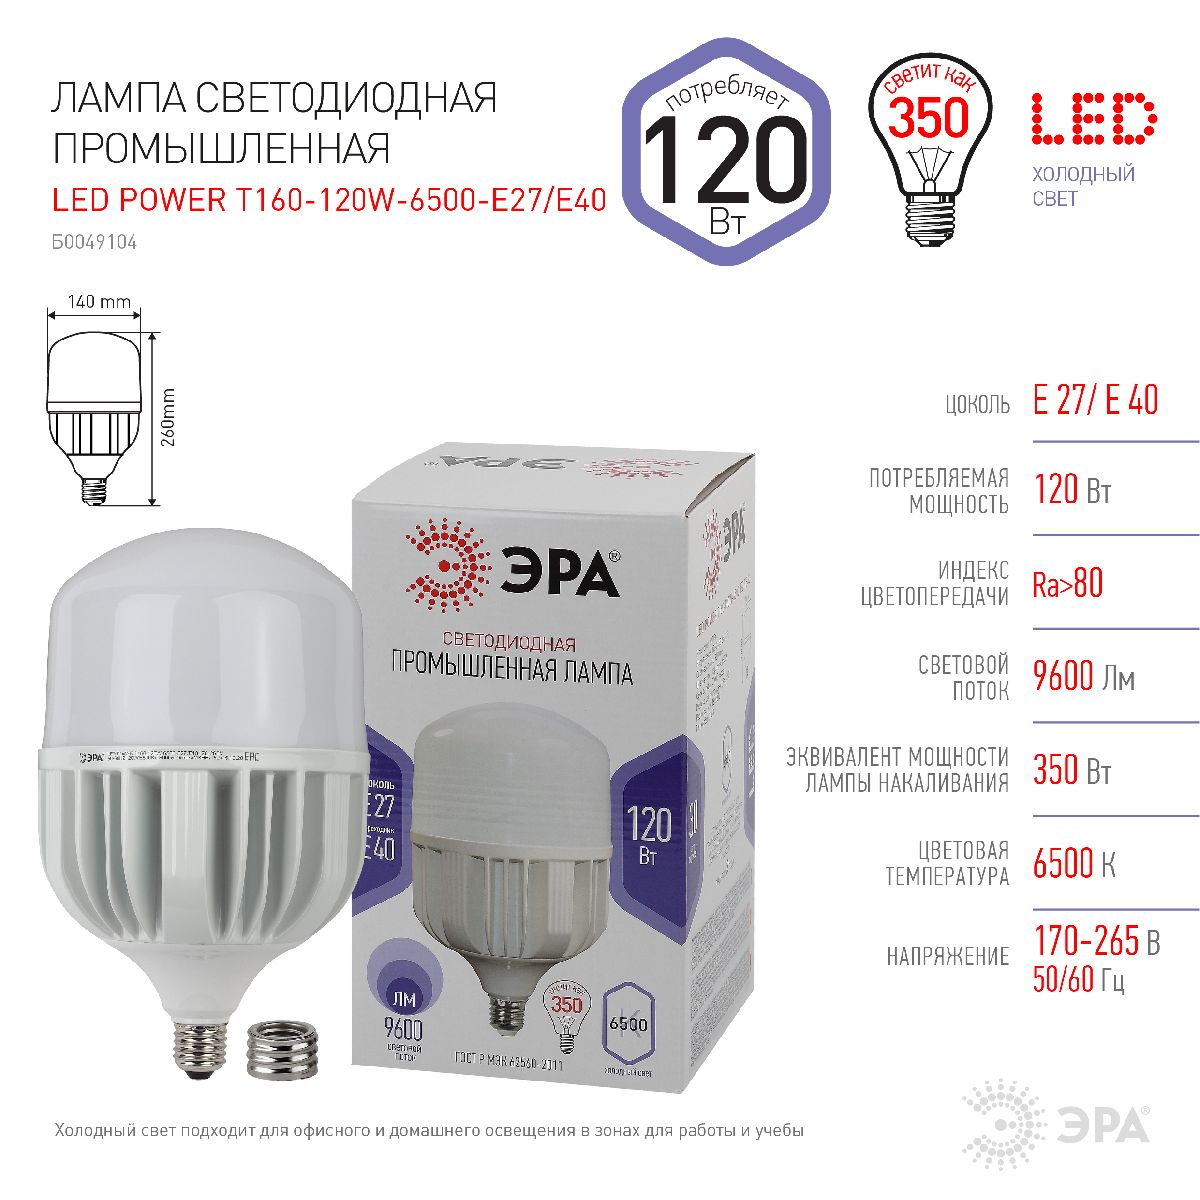 Лампа светодиодная Эра E40 120W 6500K LED POWER T160-120W-6500-E27/E40 Б0049104